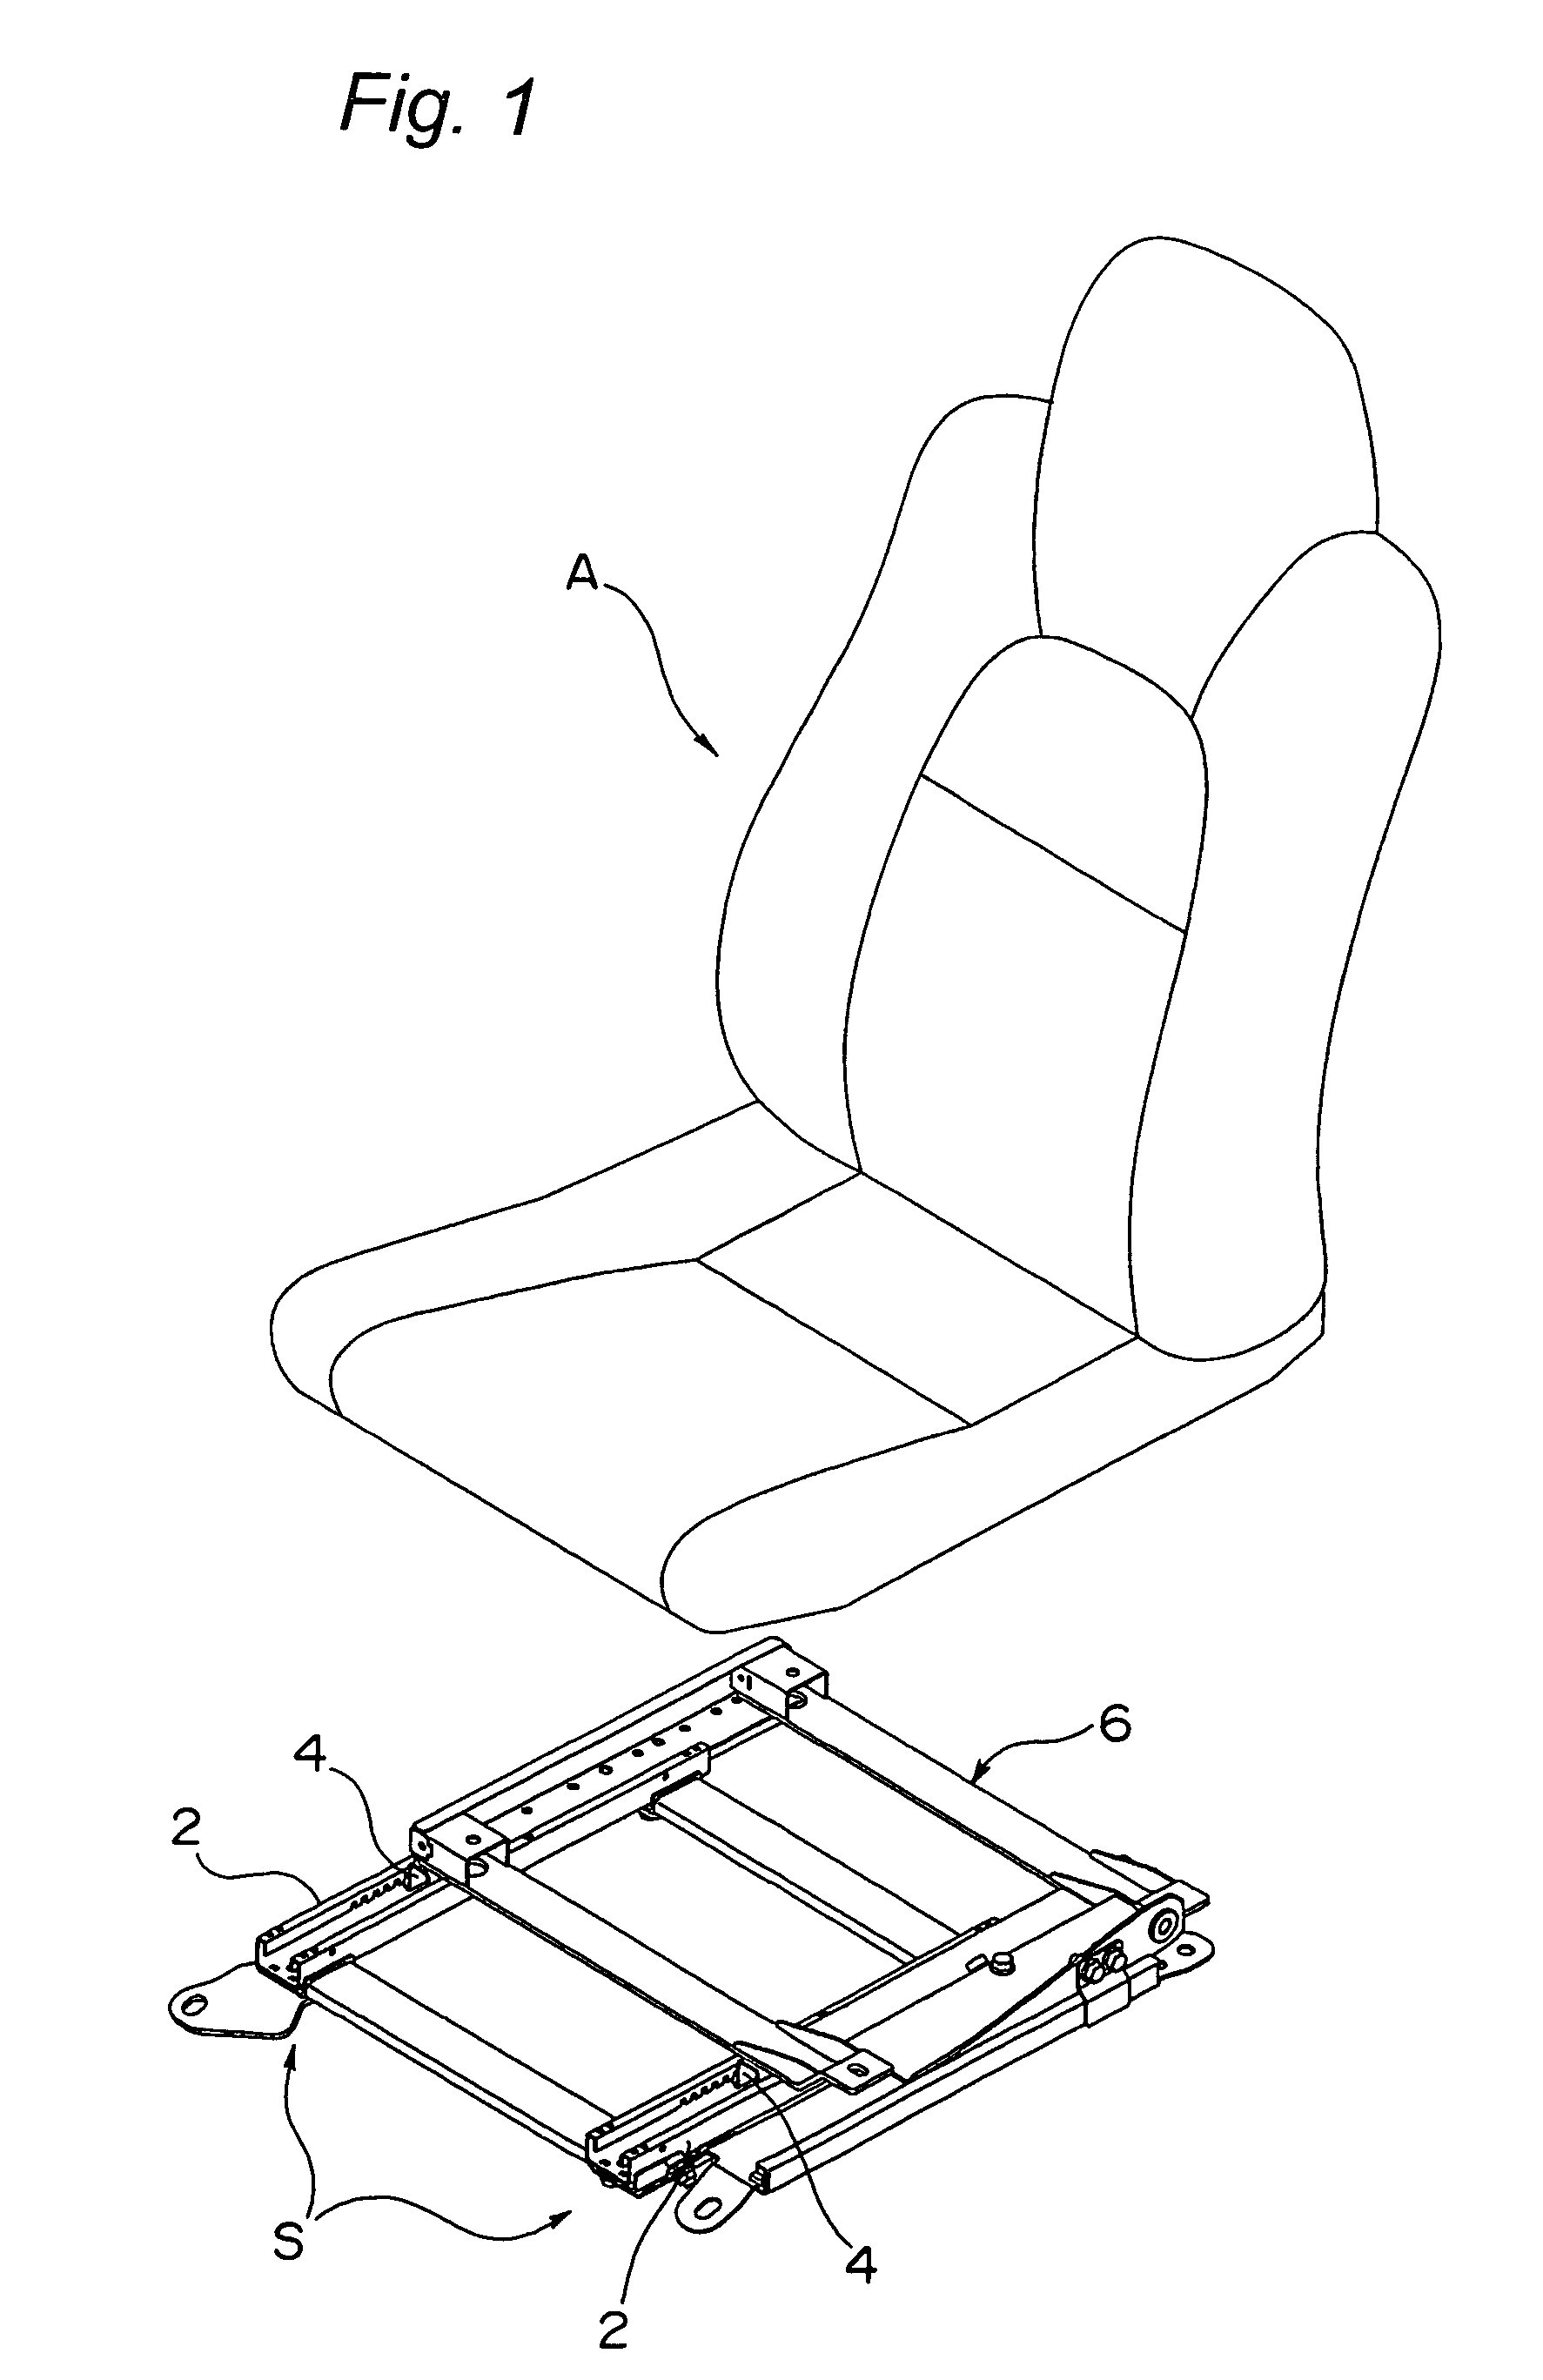 Slide adjuster for an automobile seat